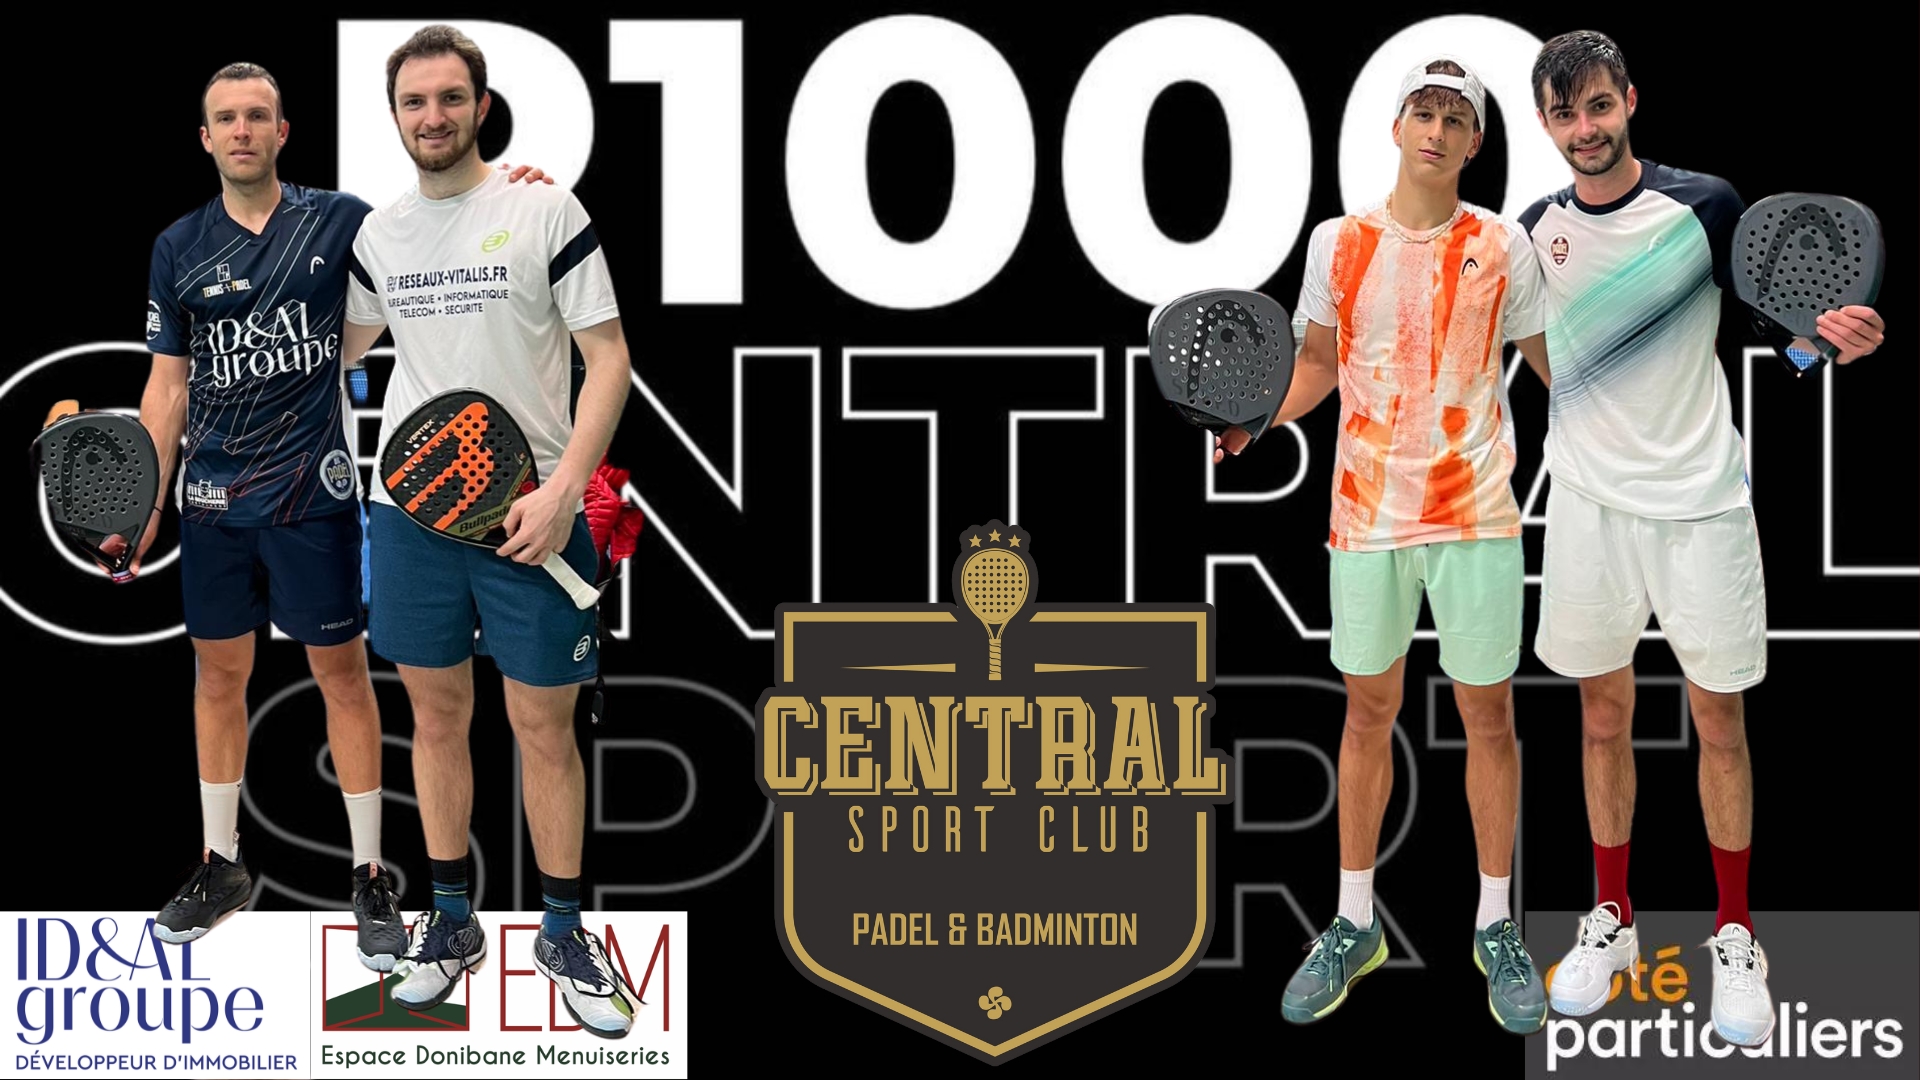 Finale – P1000 Central Sport Club – Joris / Moura vs Grué / Raichman